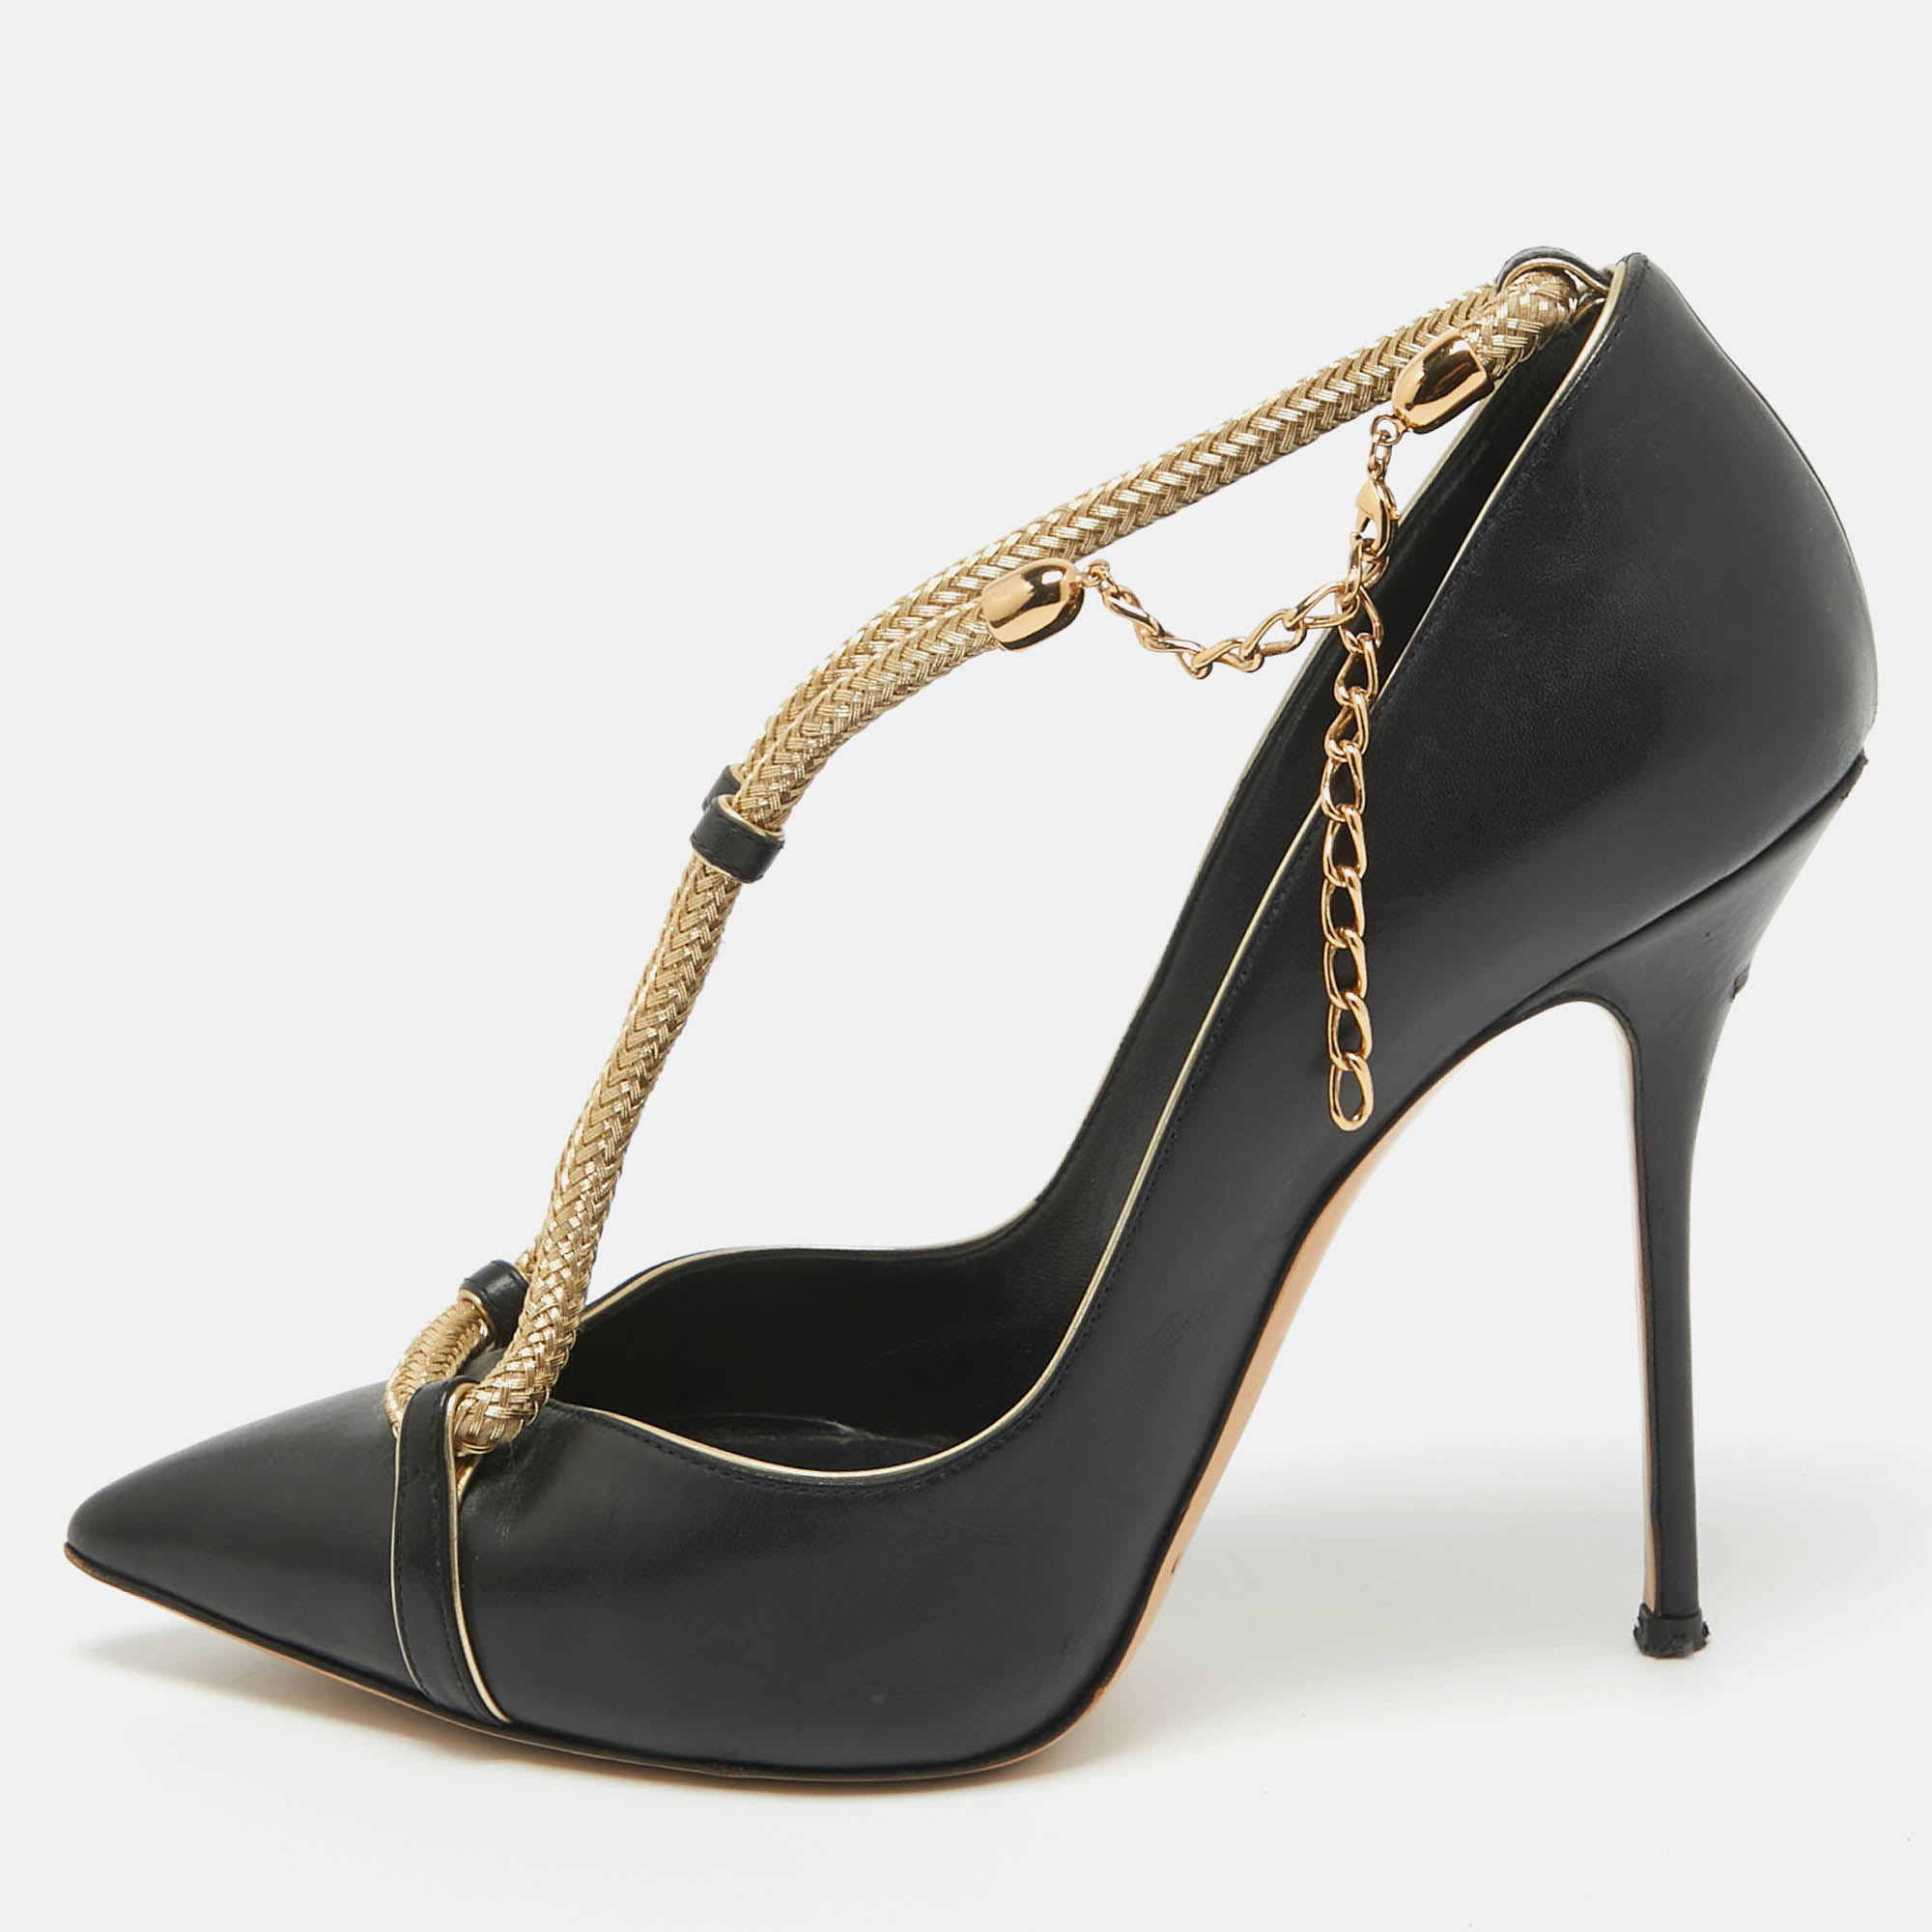 Casadei black/gold leather pumps size 38